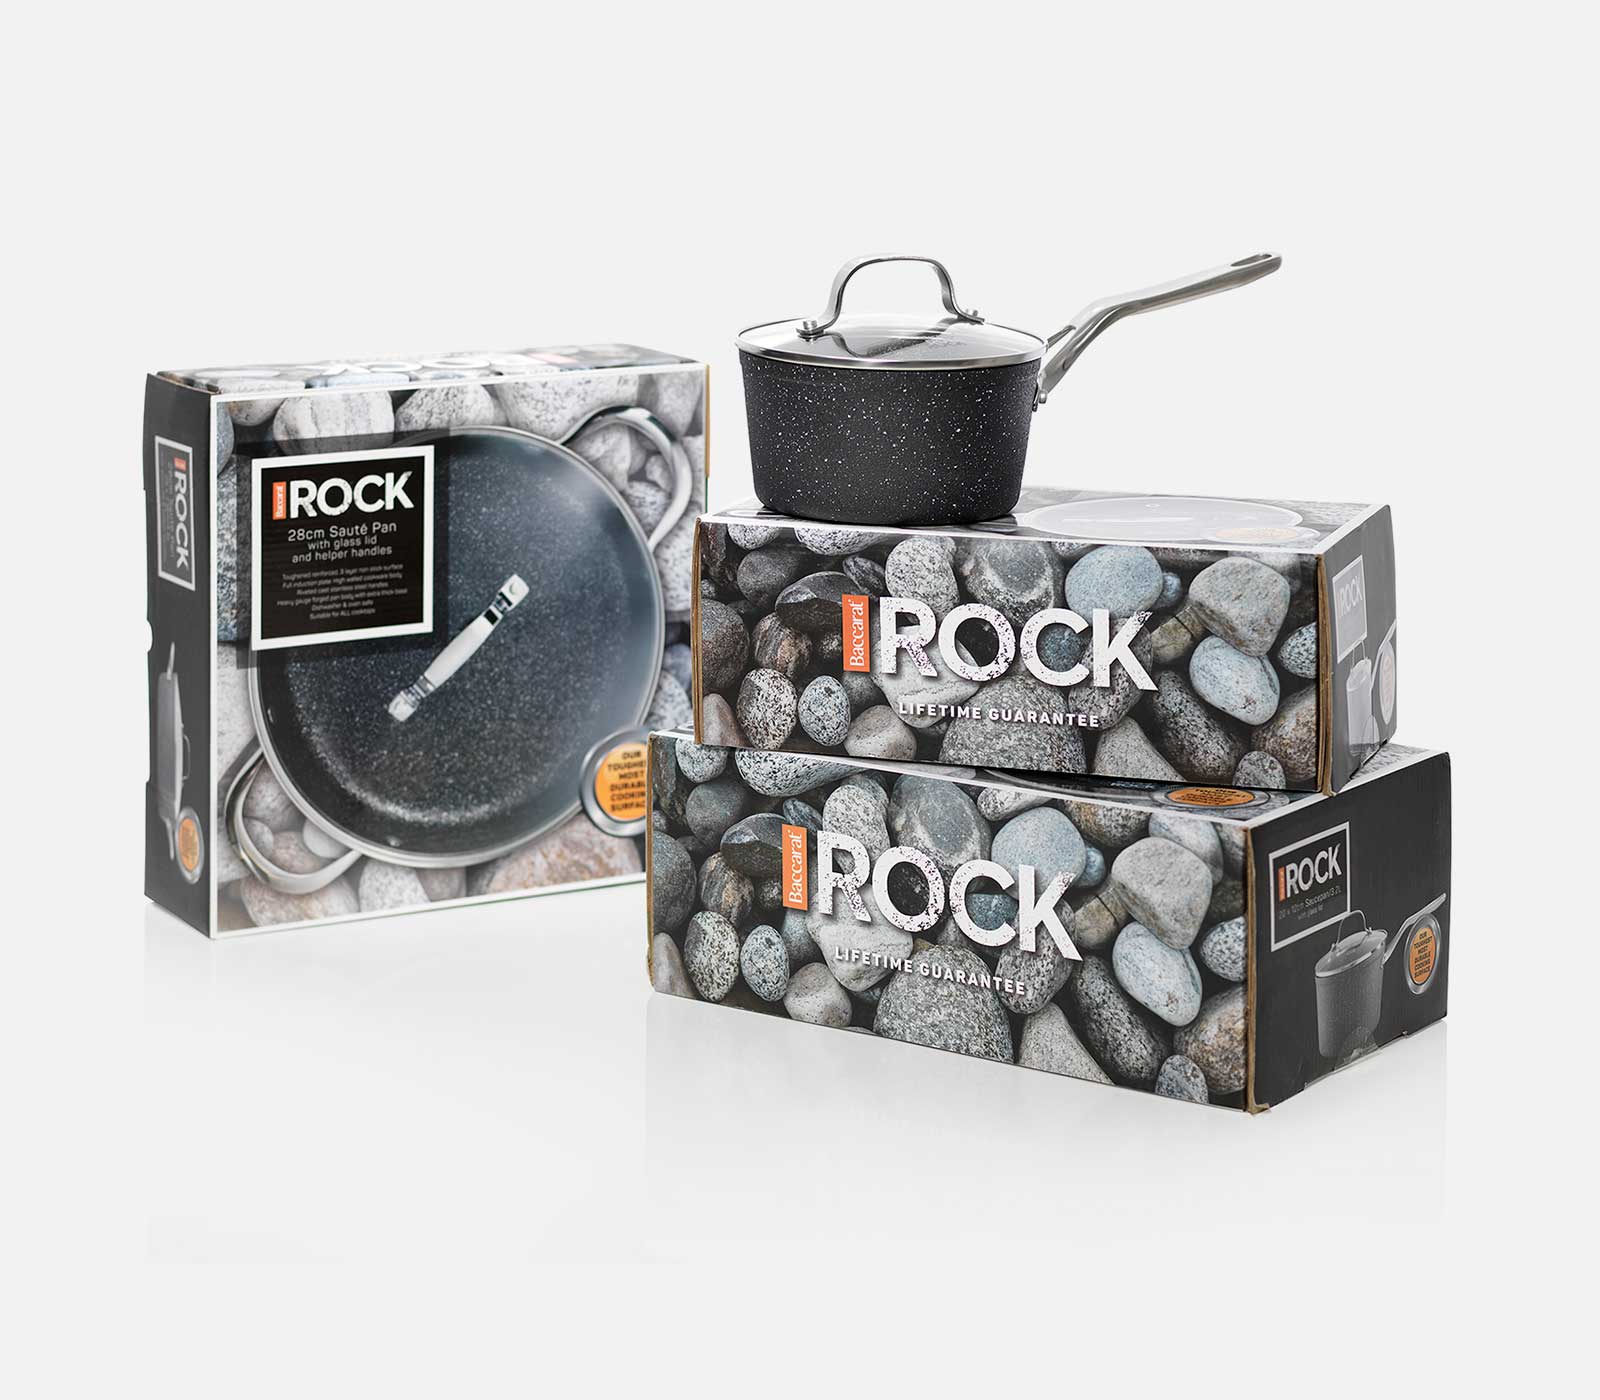 Baccarat Rock: Non-stick Cookwares